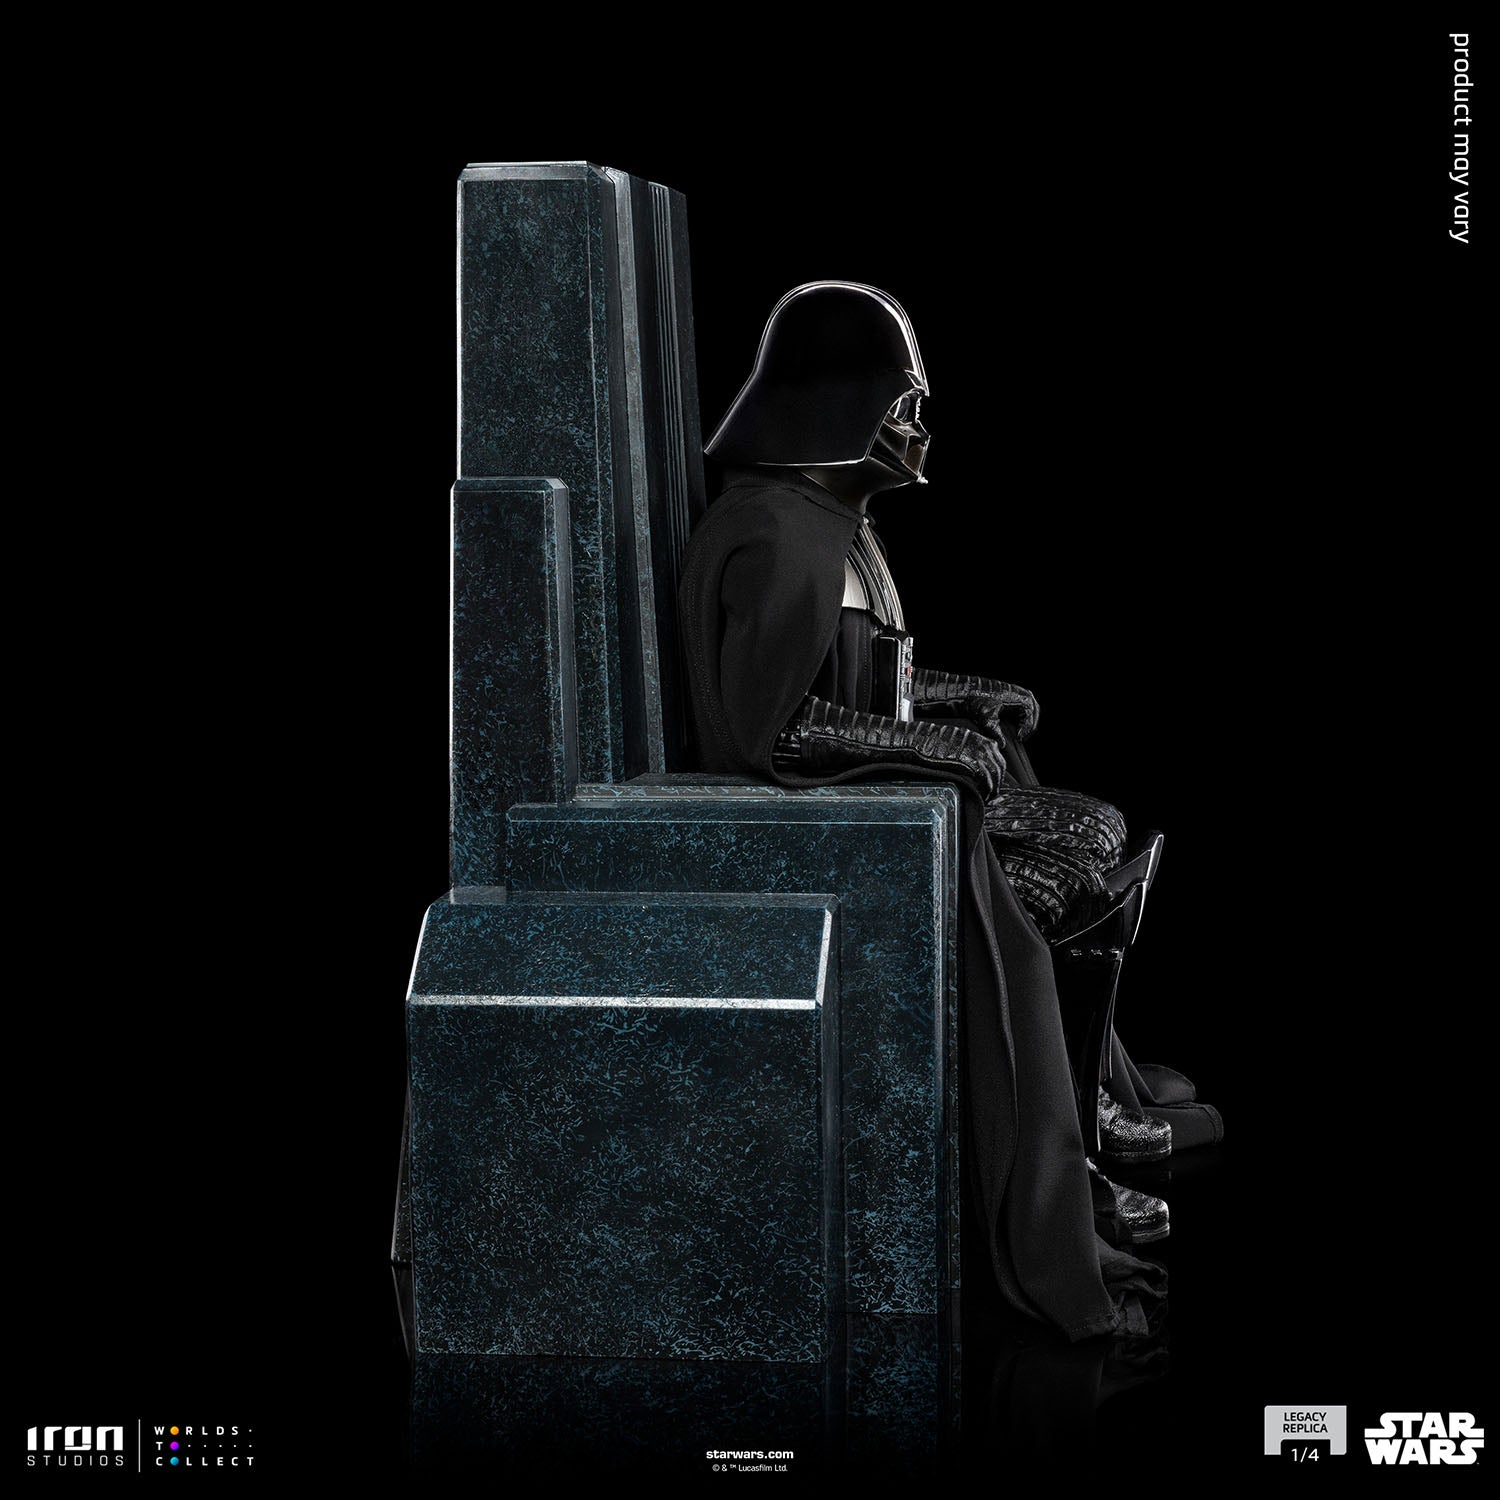 Iron Studios Star Wars Darth Vader On Throne